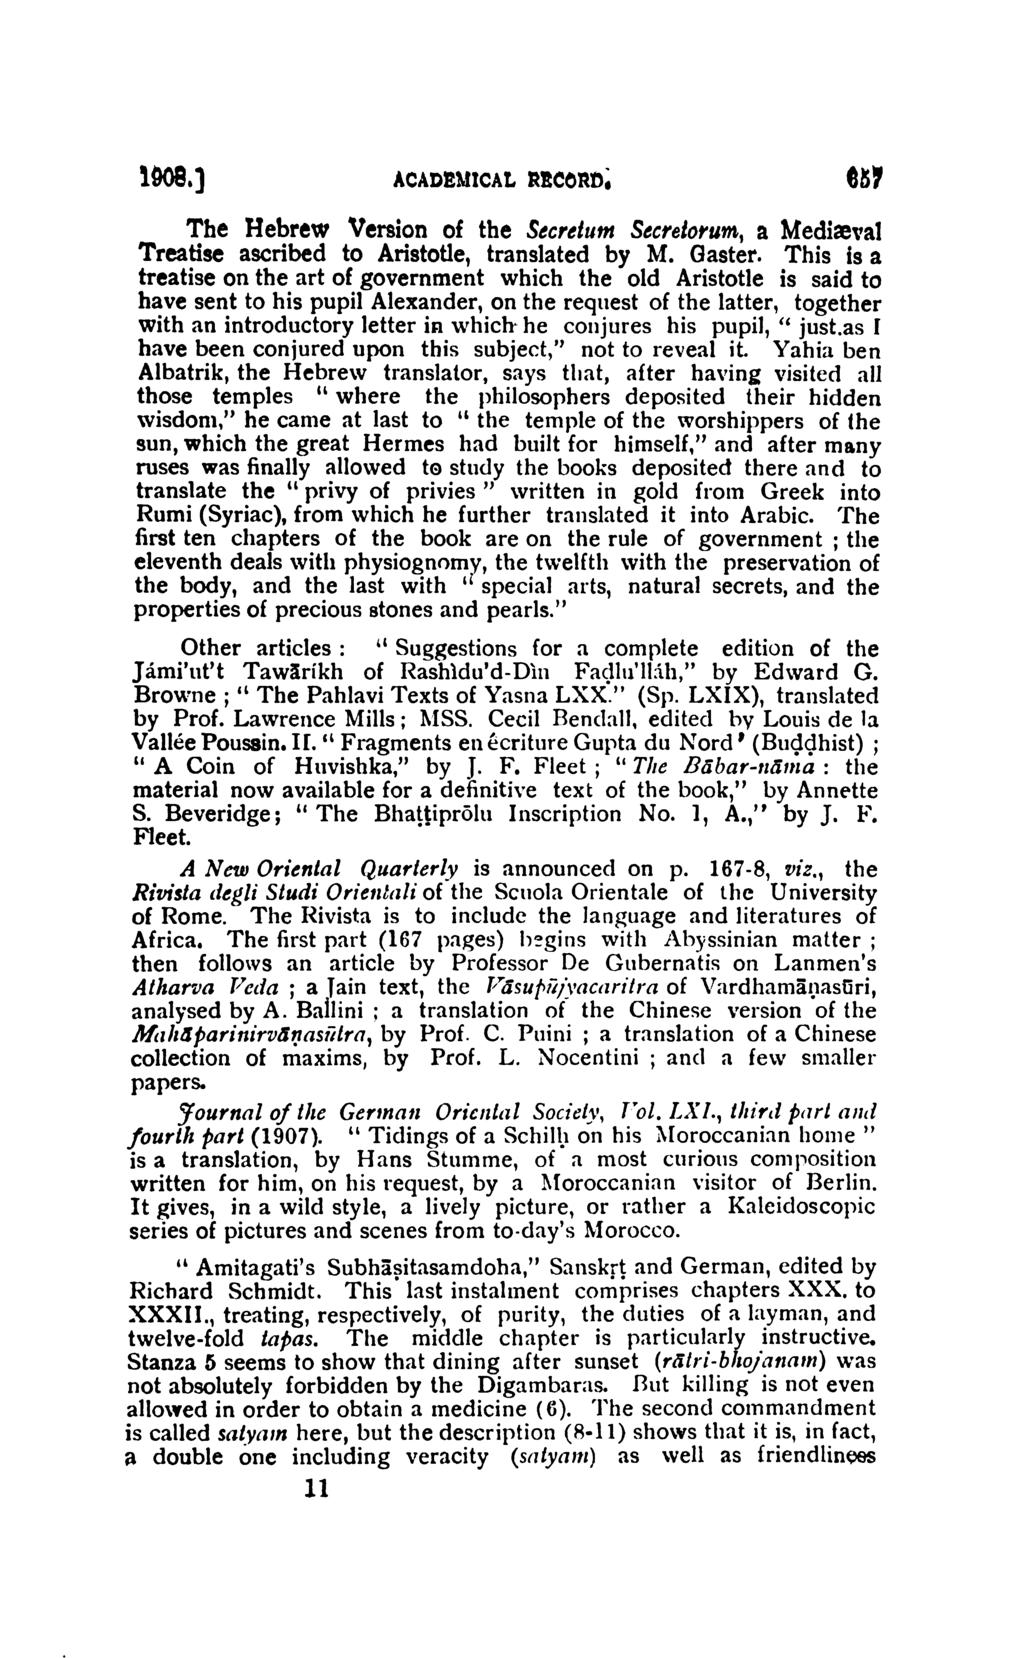 1908.] ACADEMICAL RECORDi 5? The Hebrew Version of the Secrettim Secreiorum, Medievl Trete scribed to Artotle, trnslted by M. Qster.